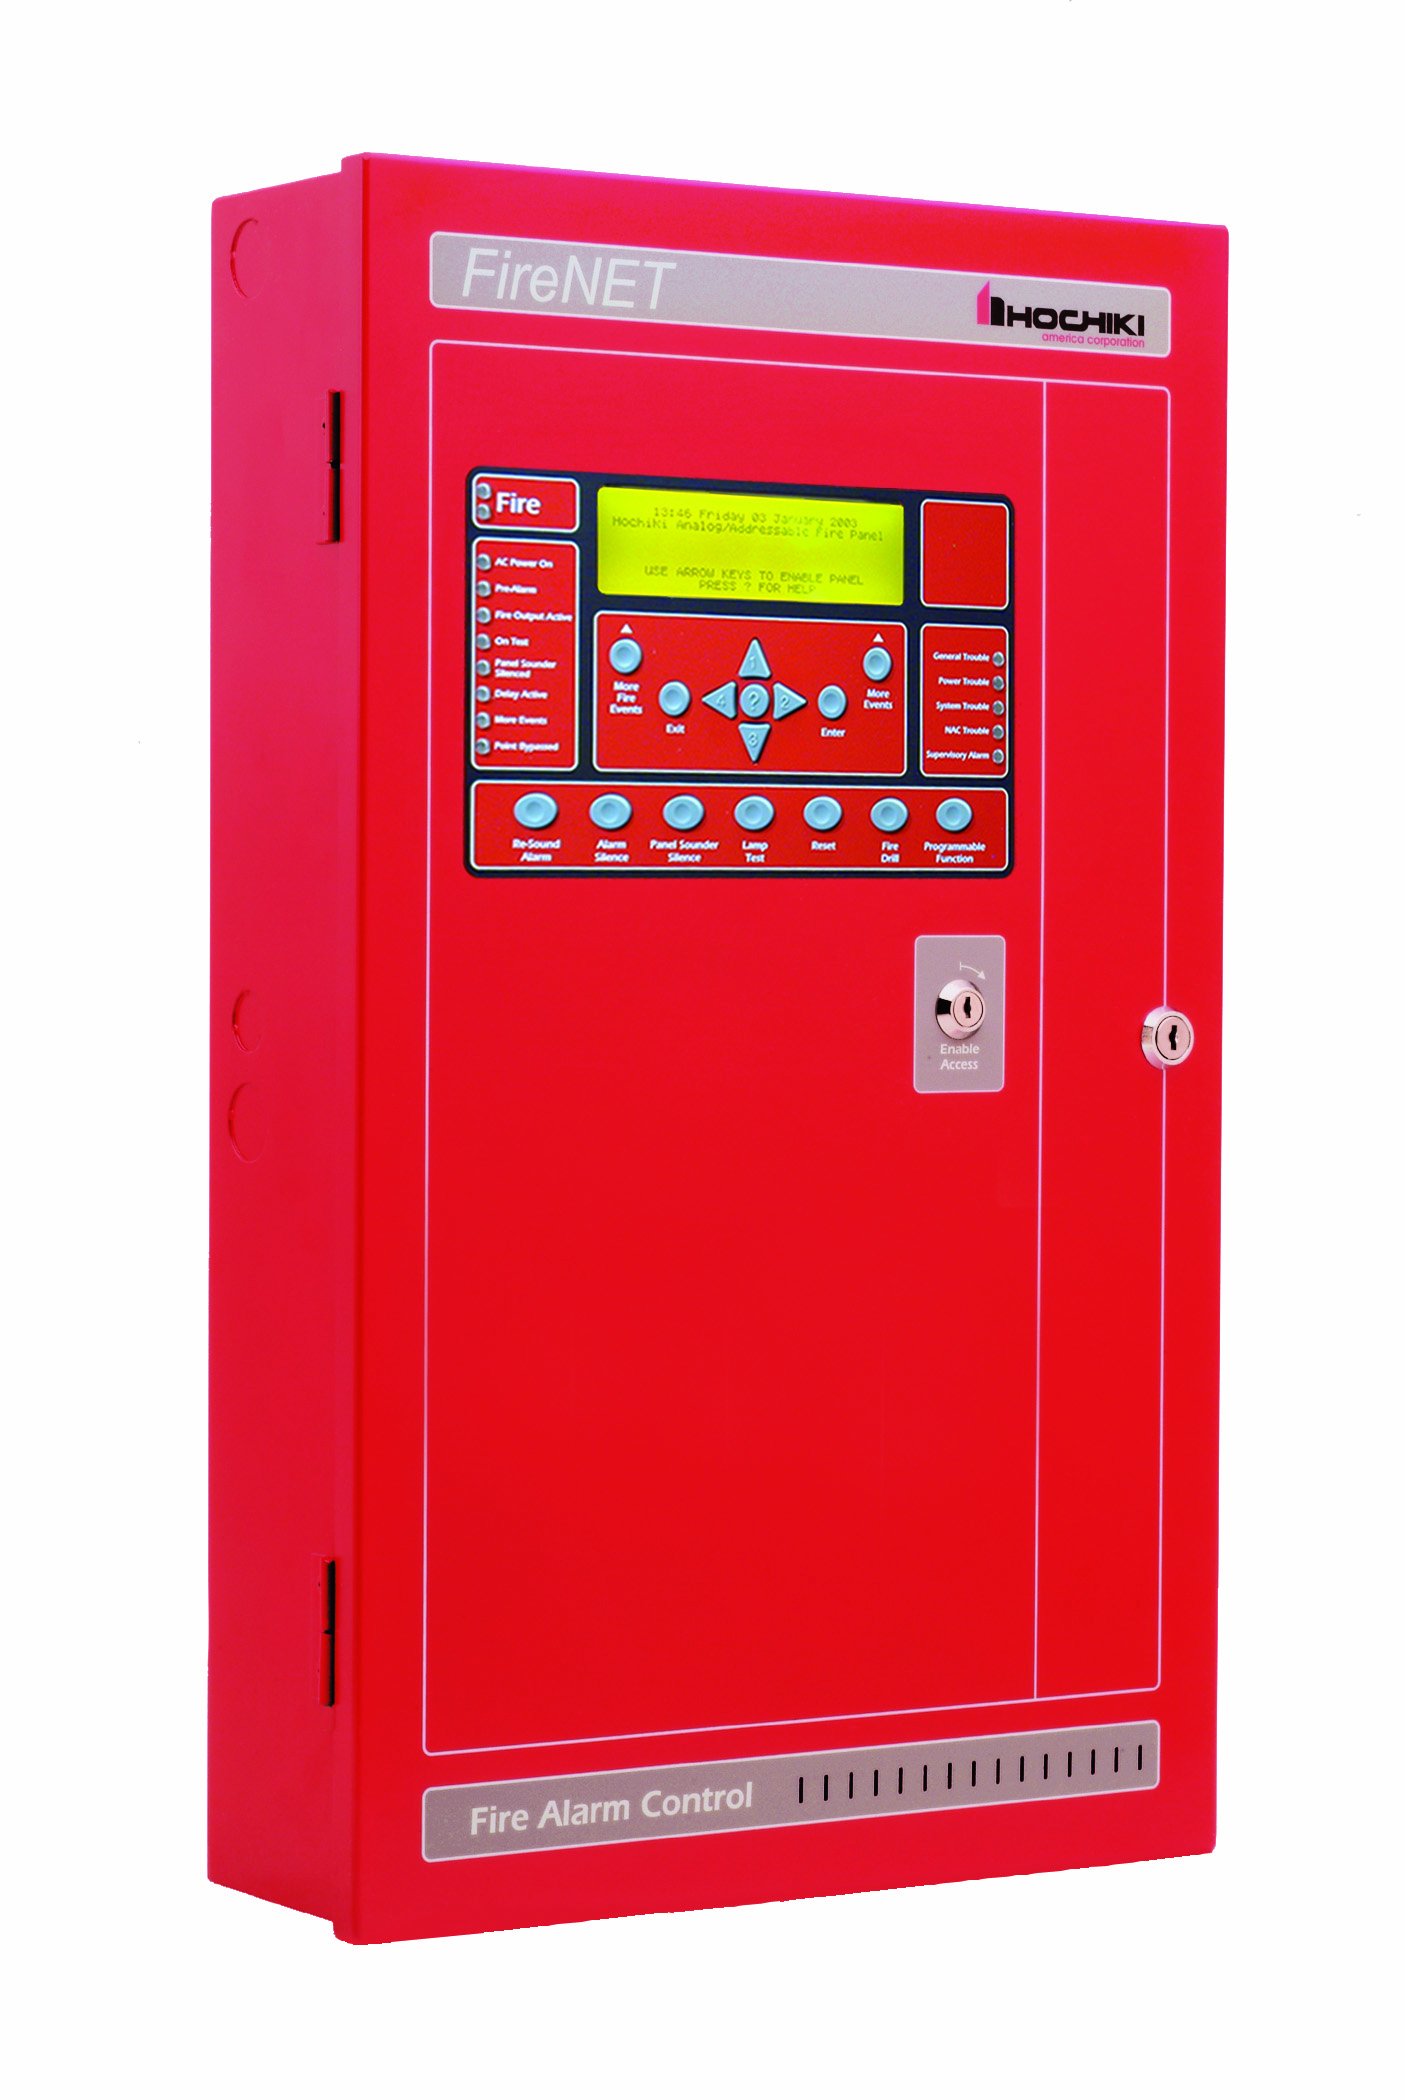 FireNET Analog Addressable Fire Alarm Control Panel